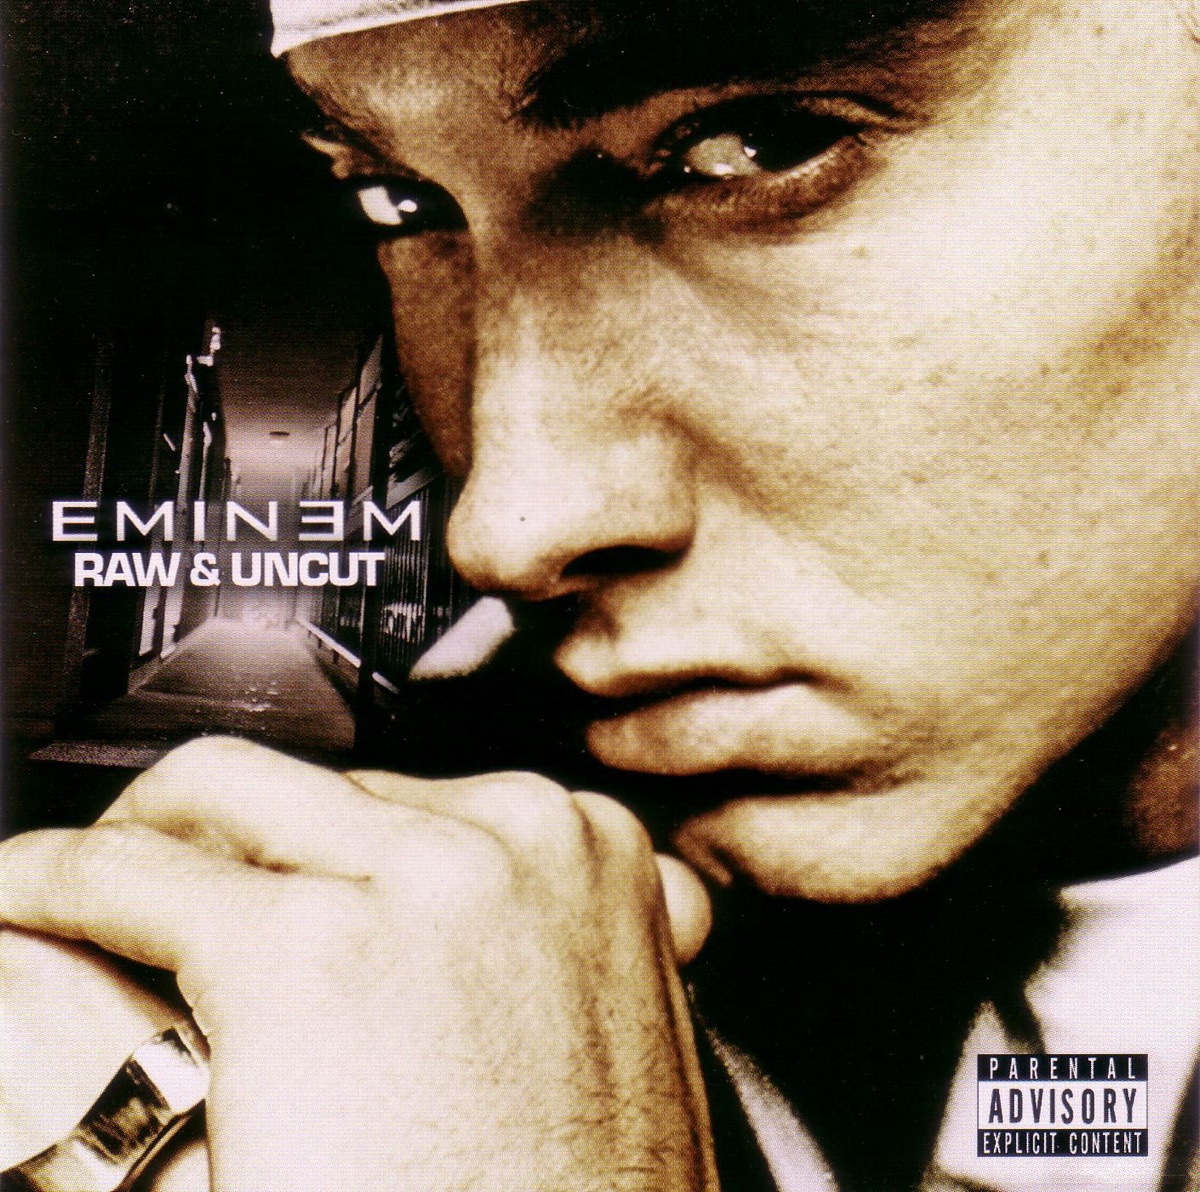 Raw & Uncut by Eminem on Apple Music